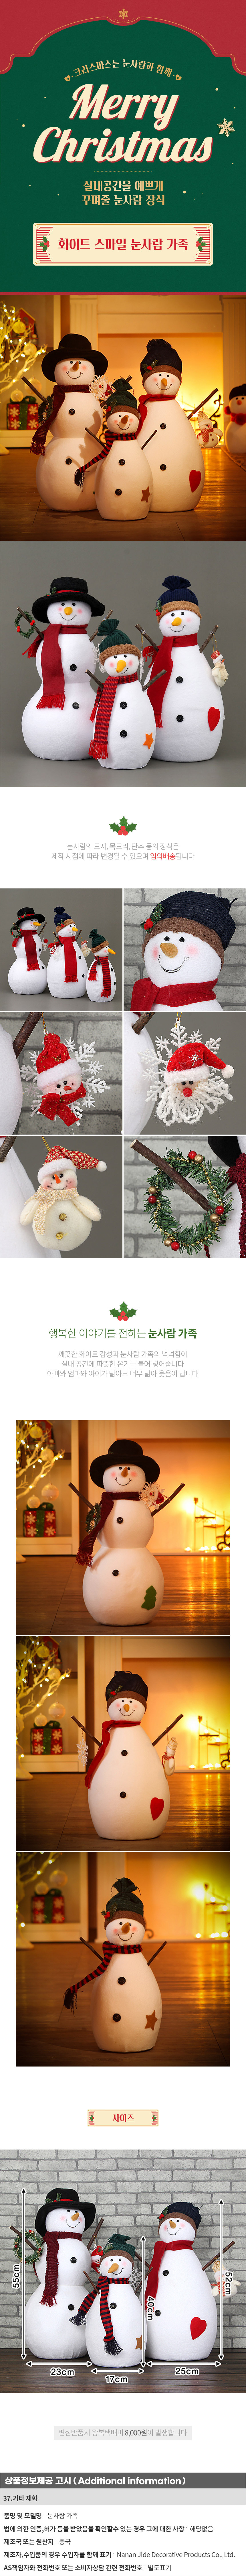 55cm 가족 눈사람 인형 성탄 크리스마스 장식소품